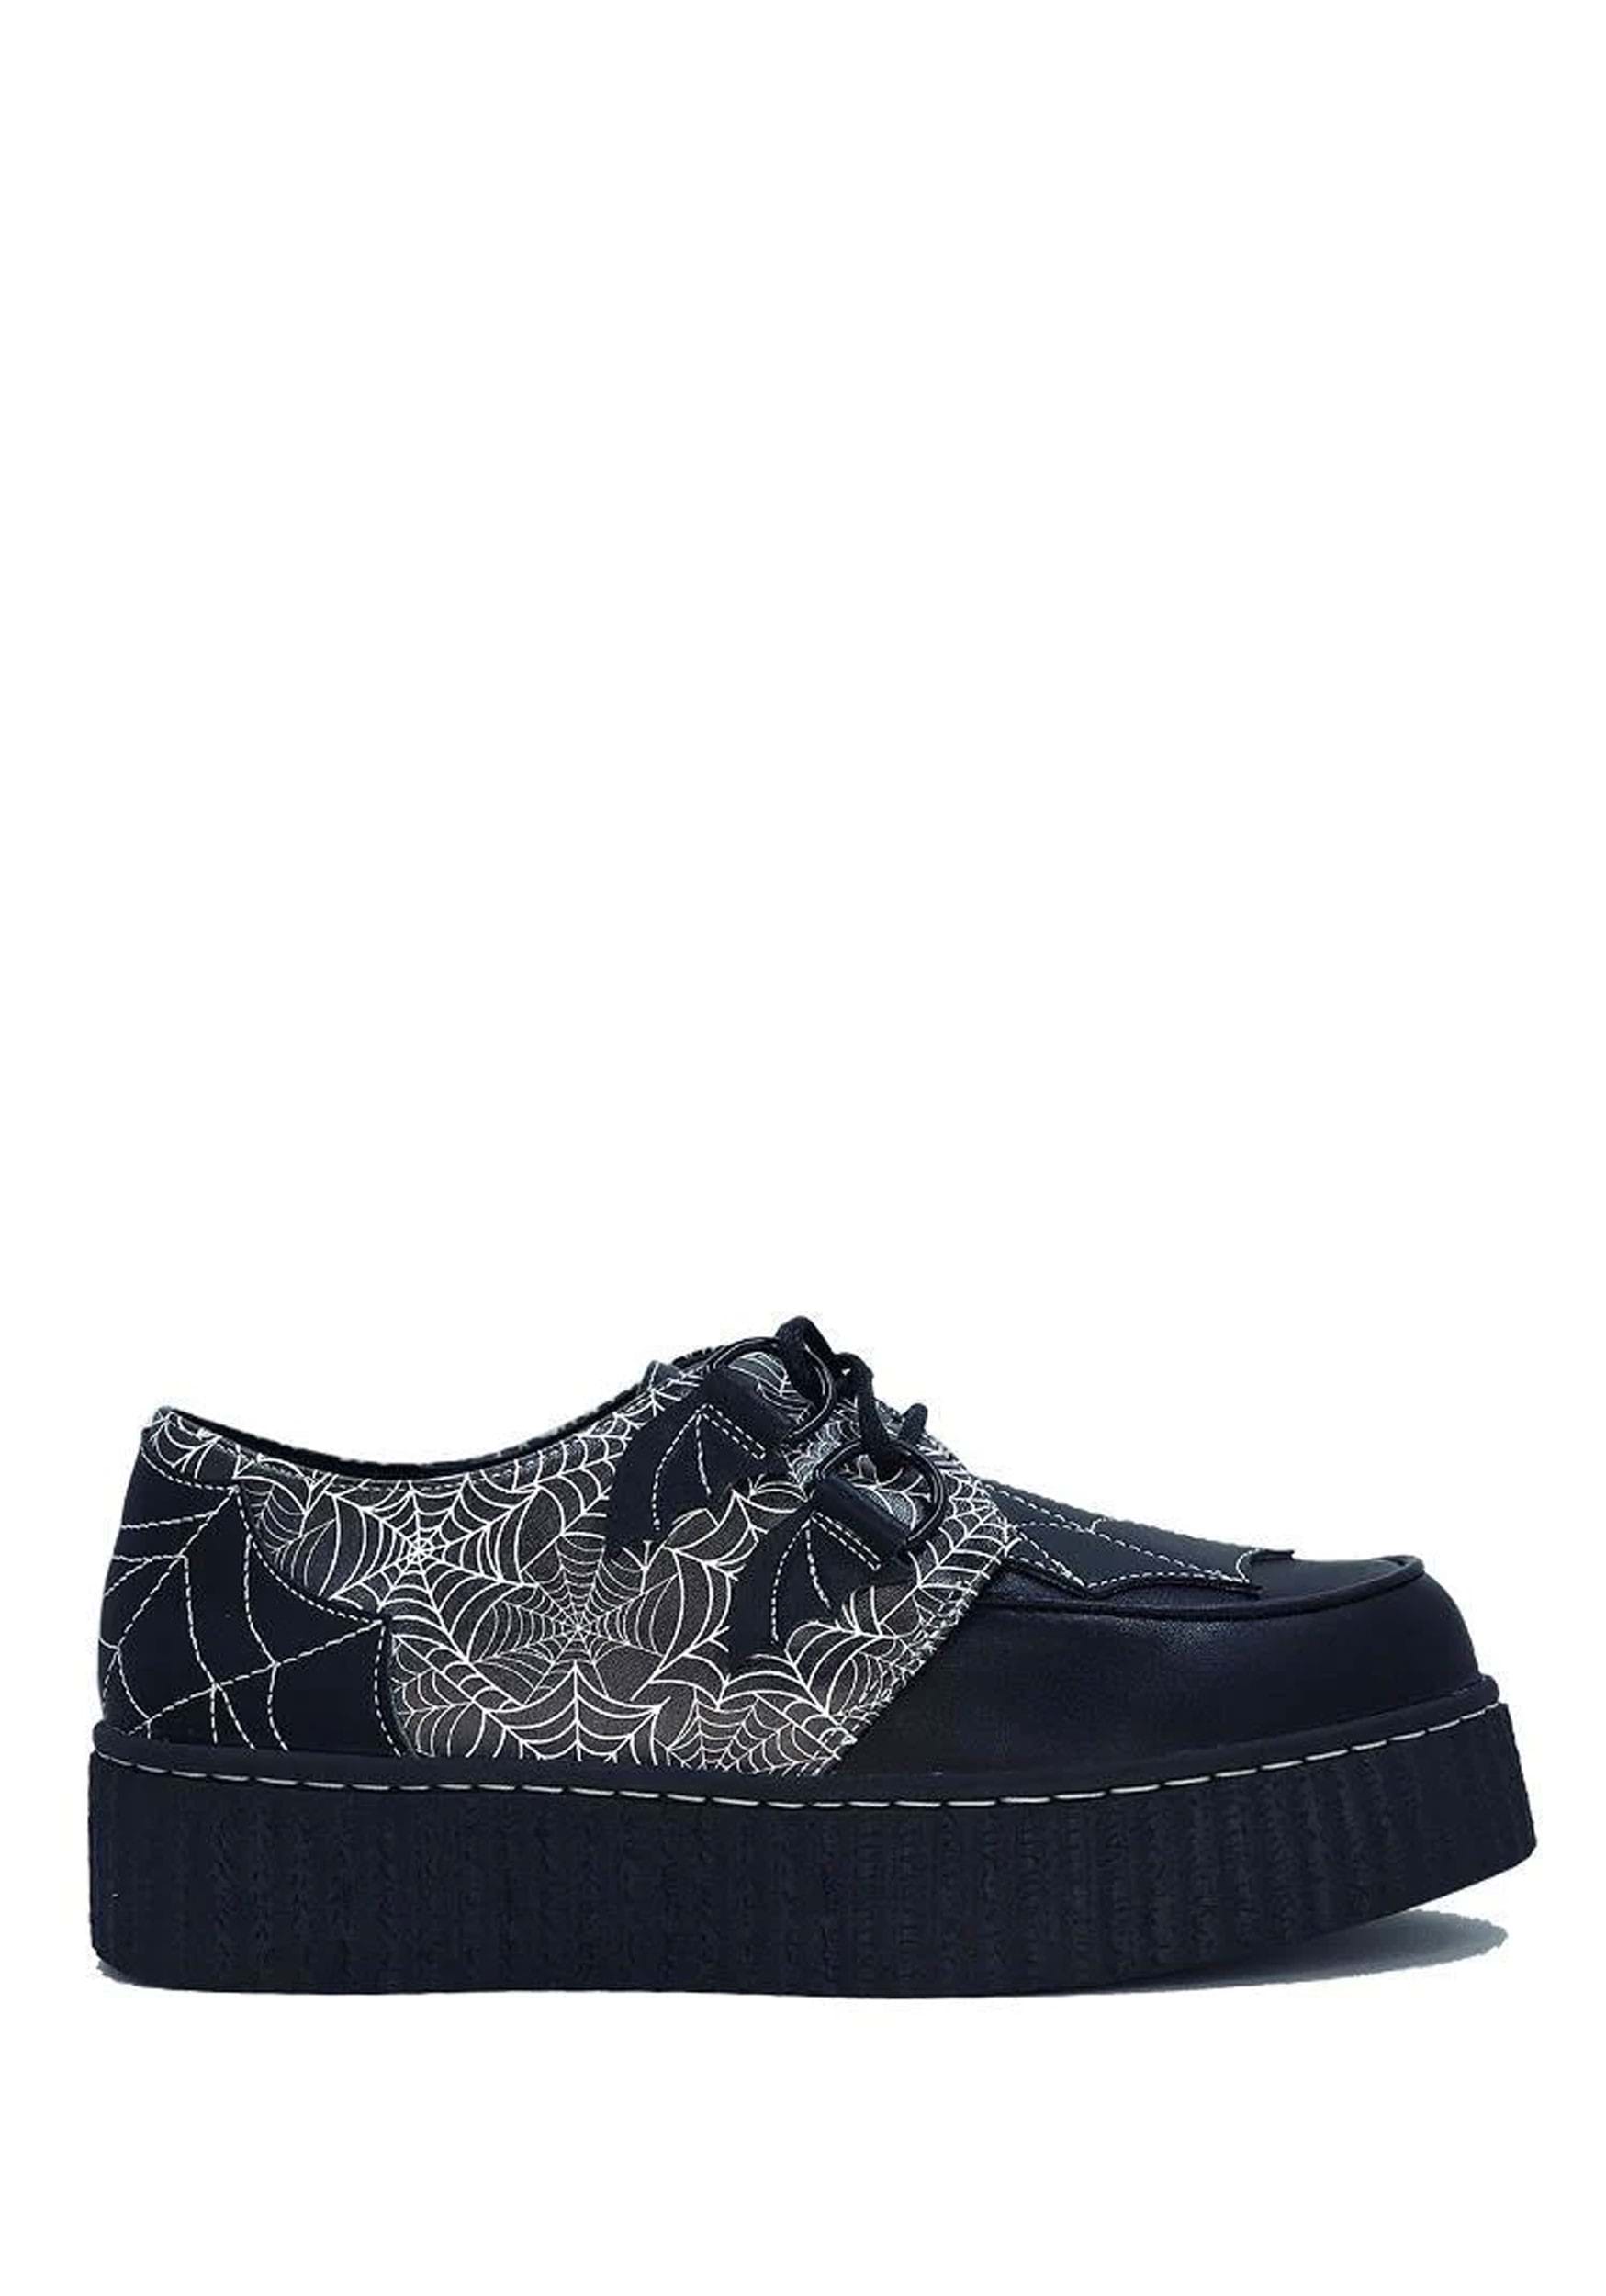 Image of Krypt Spiderweb Creeper Shoes for Women ID SVKRYPTSPIDERWEB-BK-11